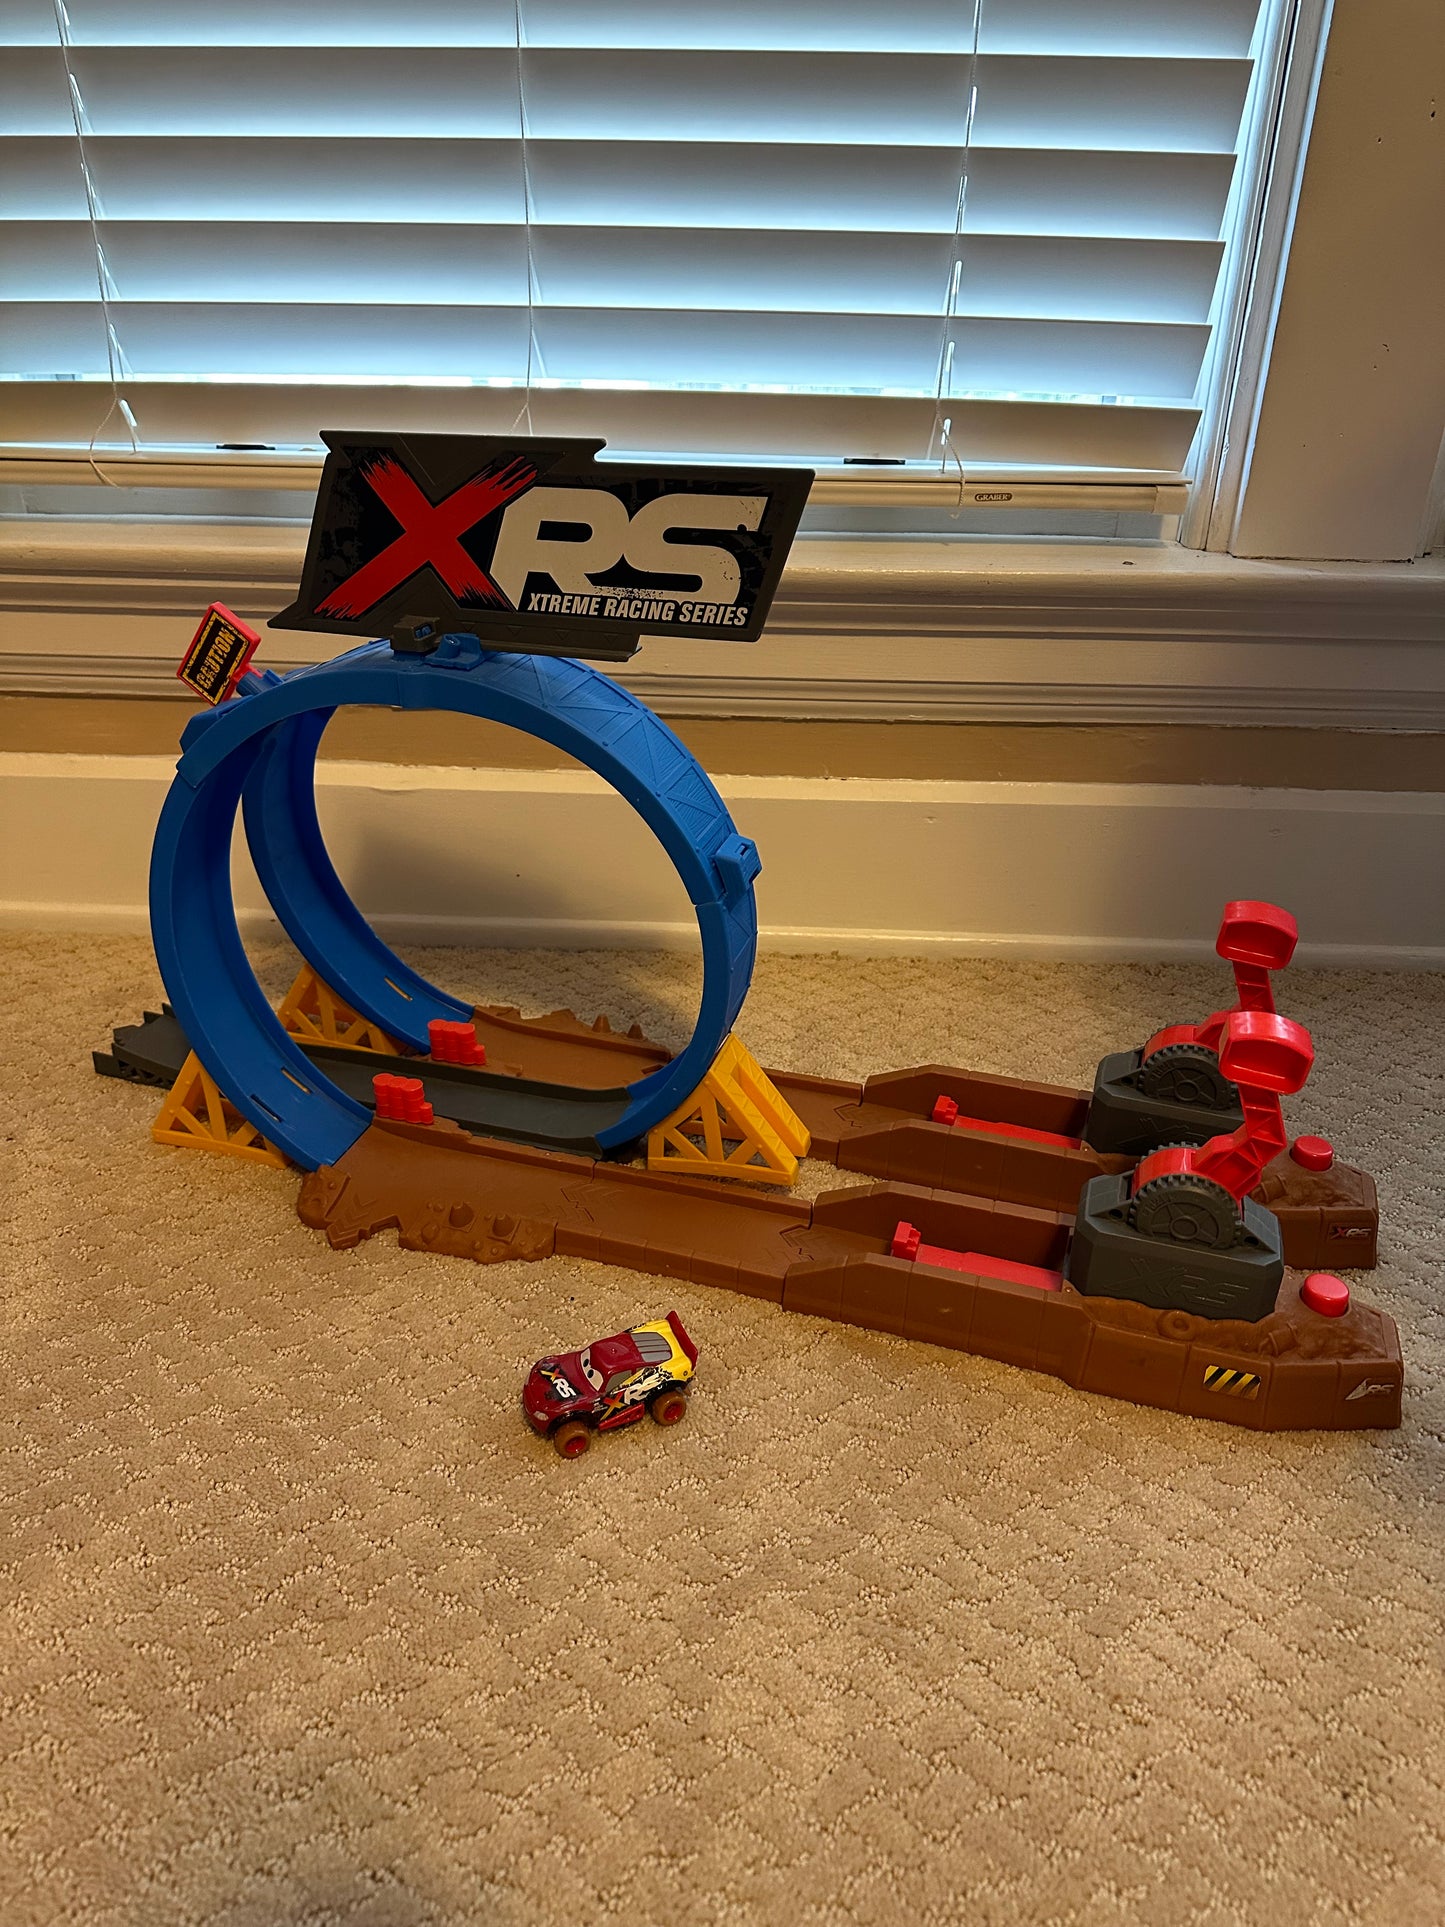 Disney Pixar Cars XRS Crash Challenge Playset